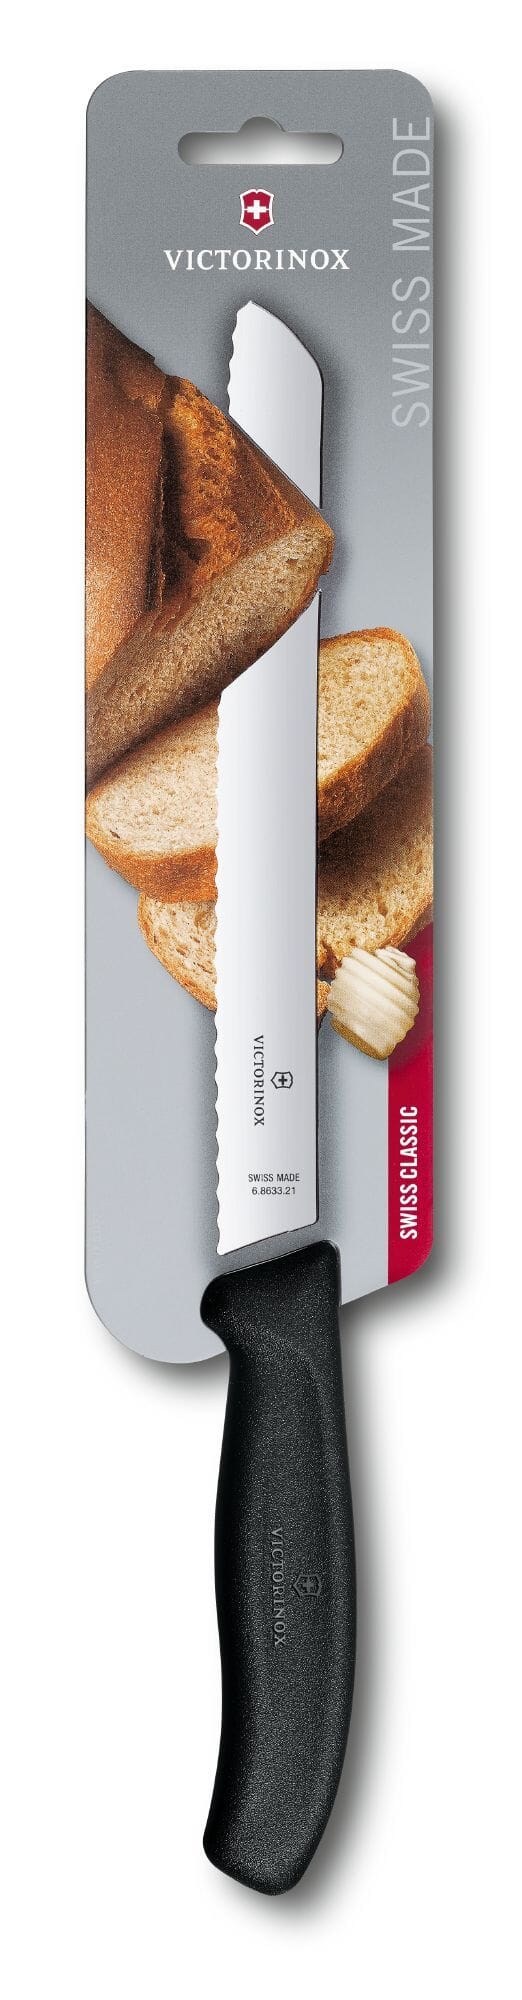 Victorinox Bread Knife 6.8633.21cm Black Swiss Classic Blister